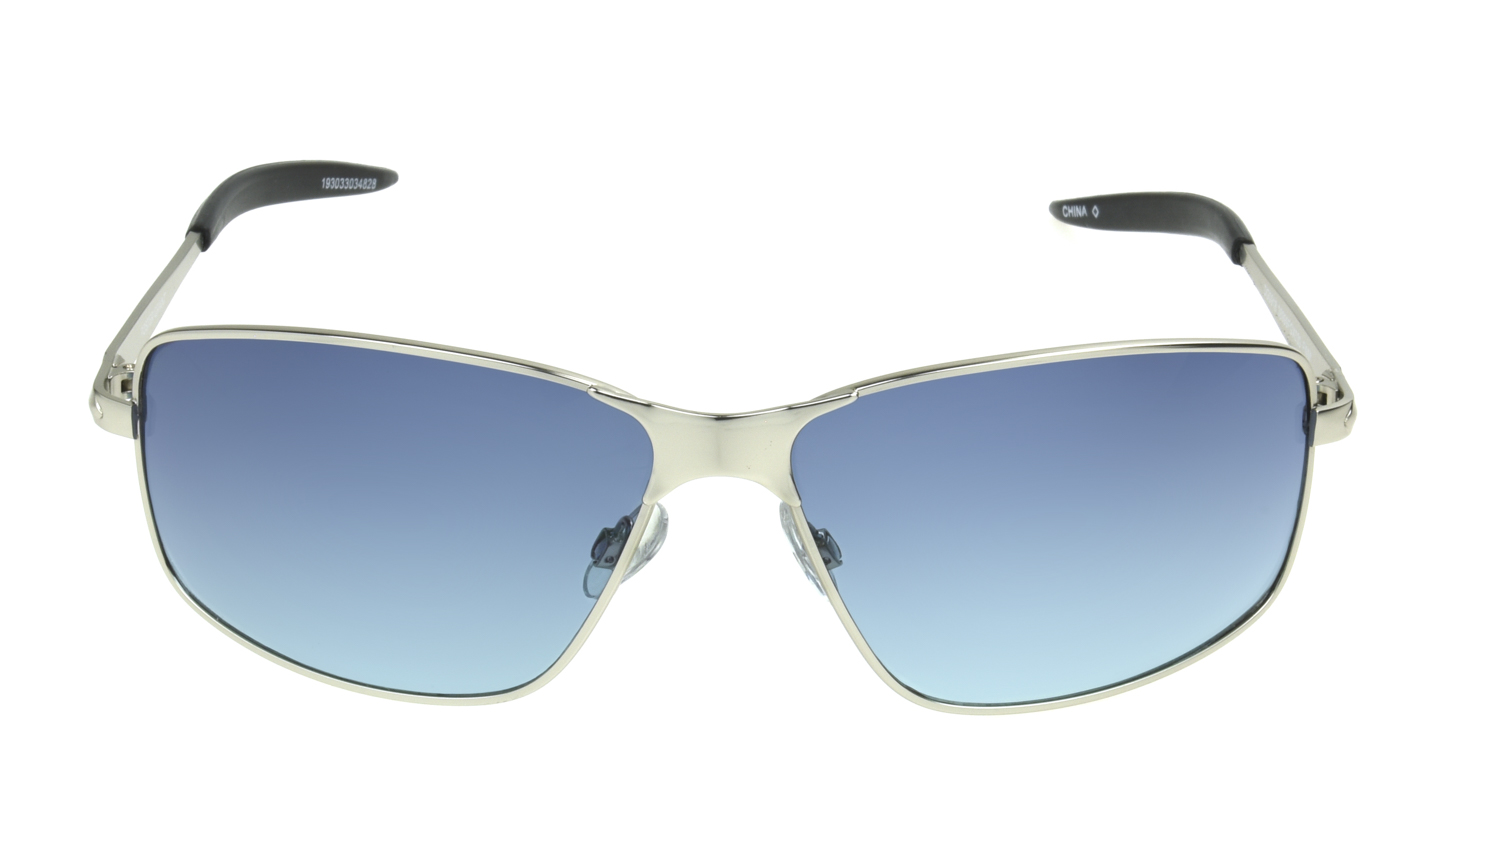 Foster Grant Men's Silver Rectangle Sunglasses XX12 - image 2 of 3